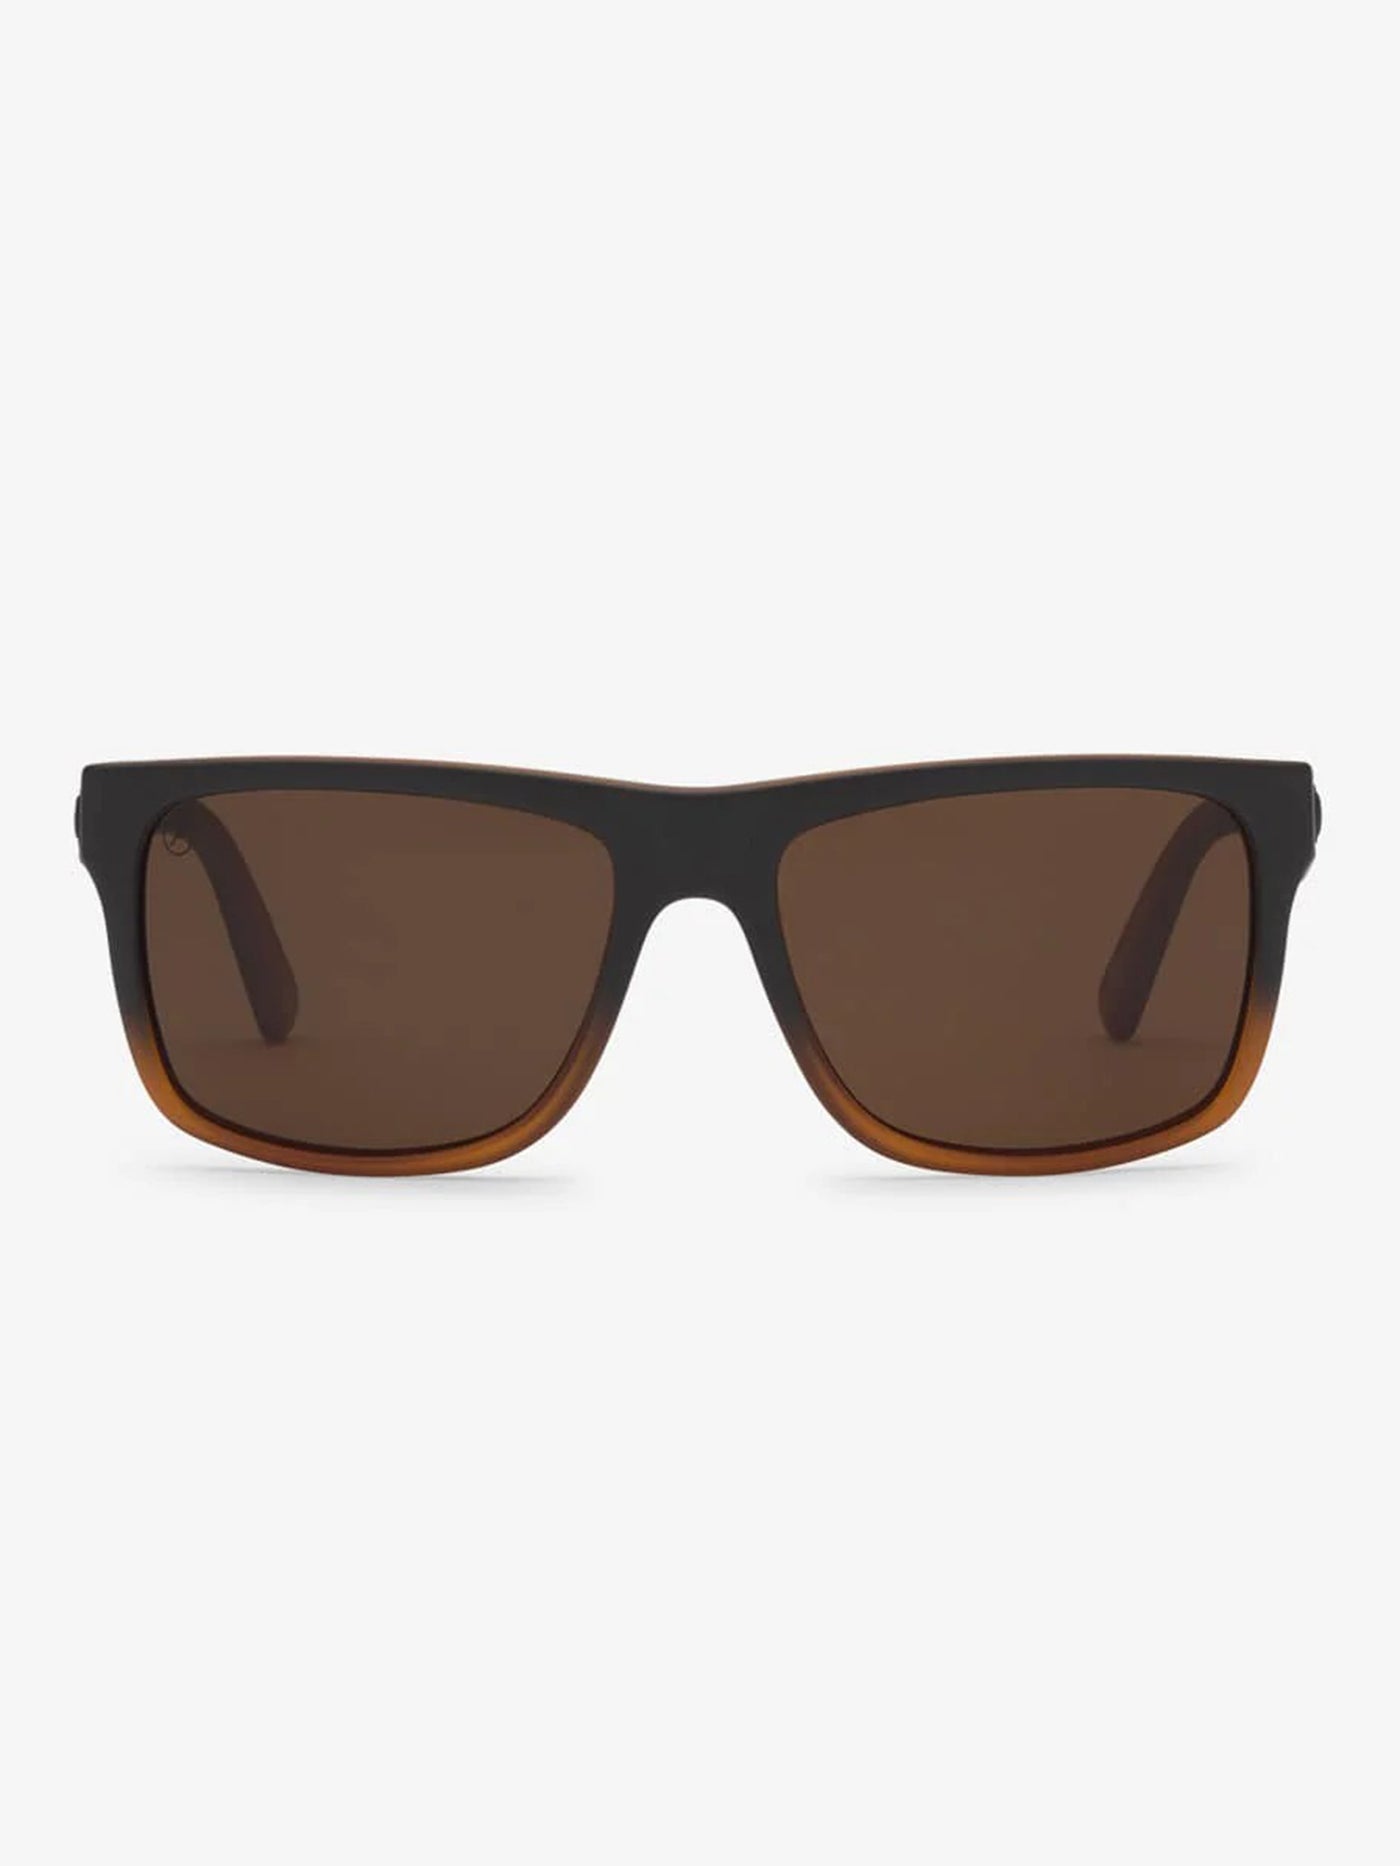 Electric Swingarm Black Amber/Bronze Polarized Sunglasses